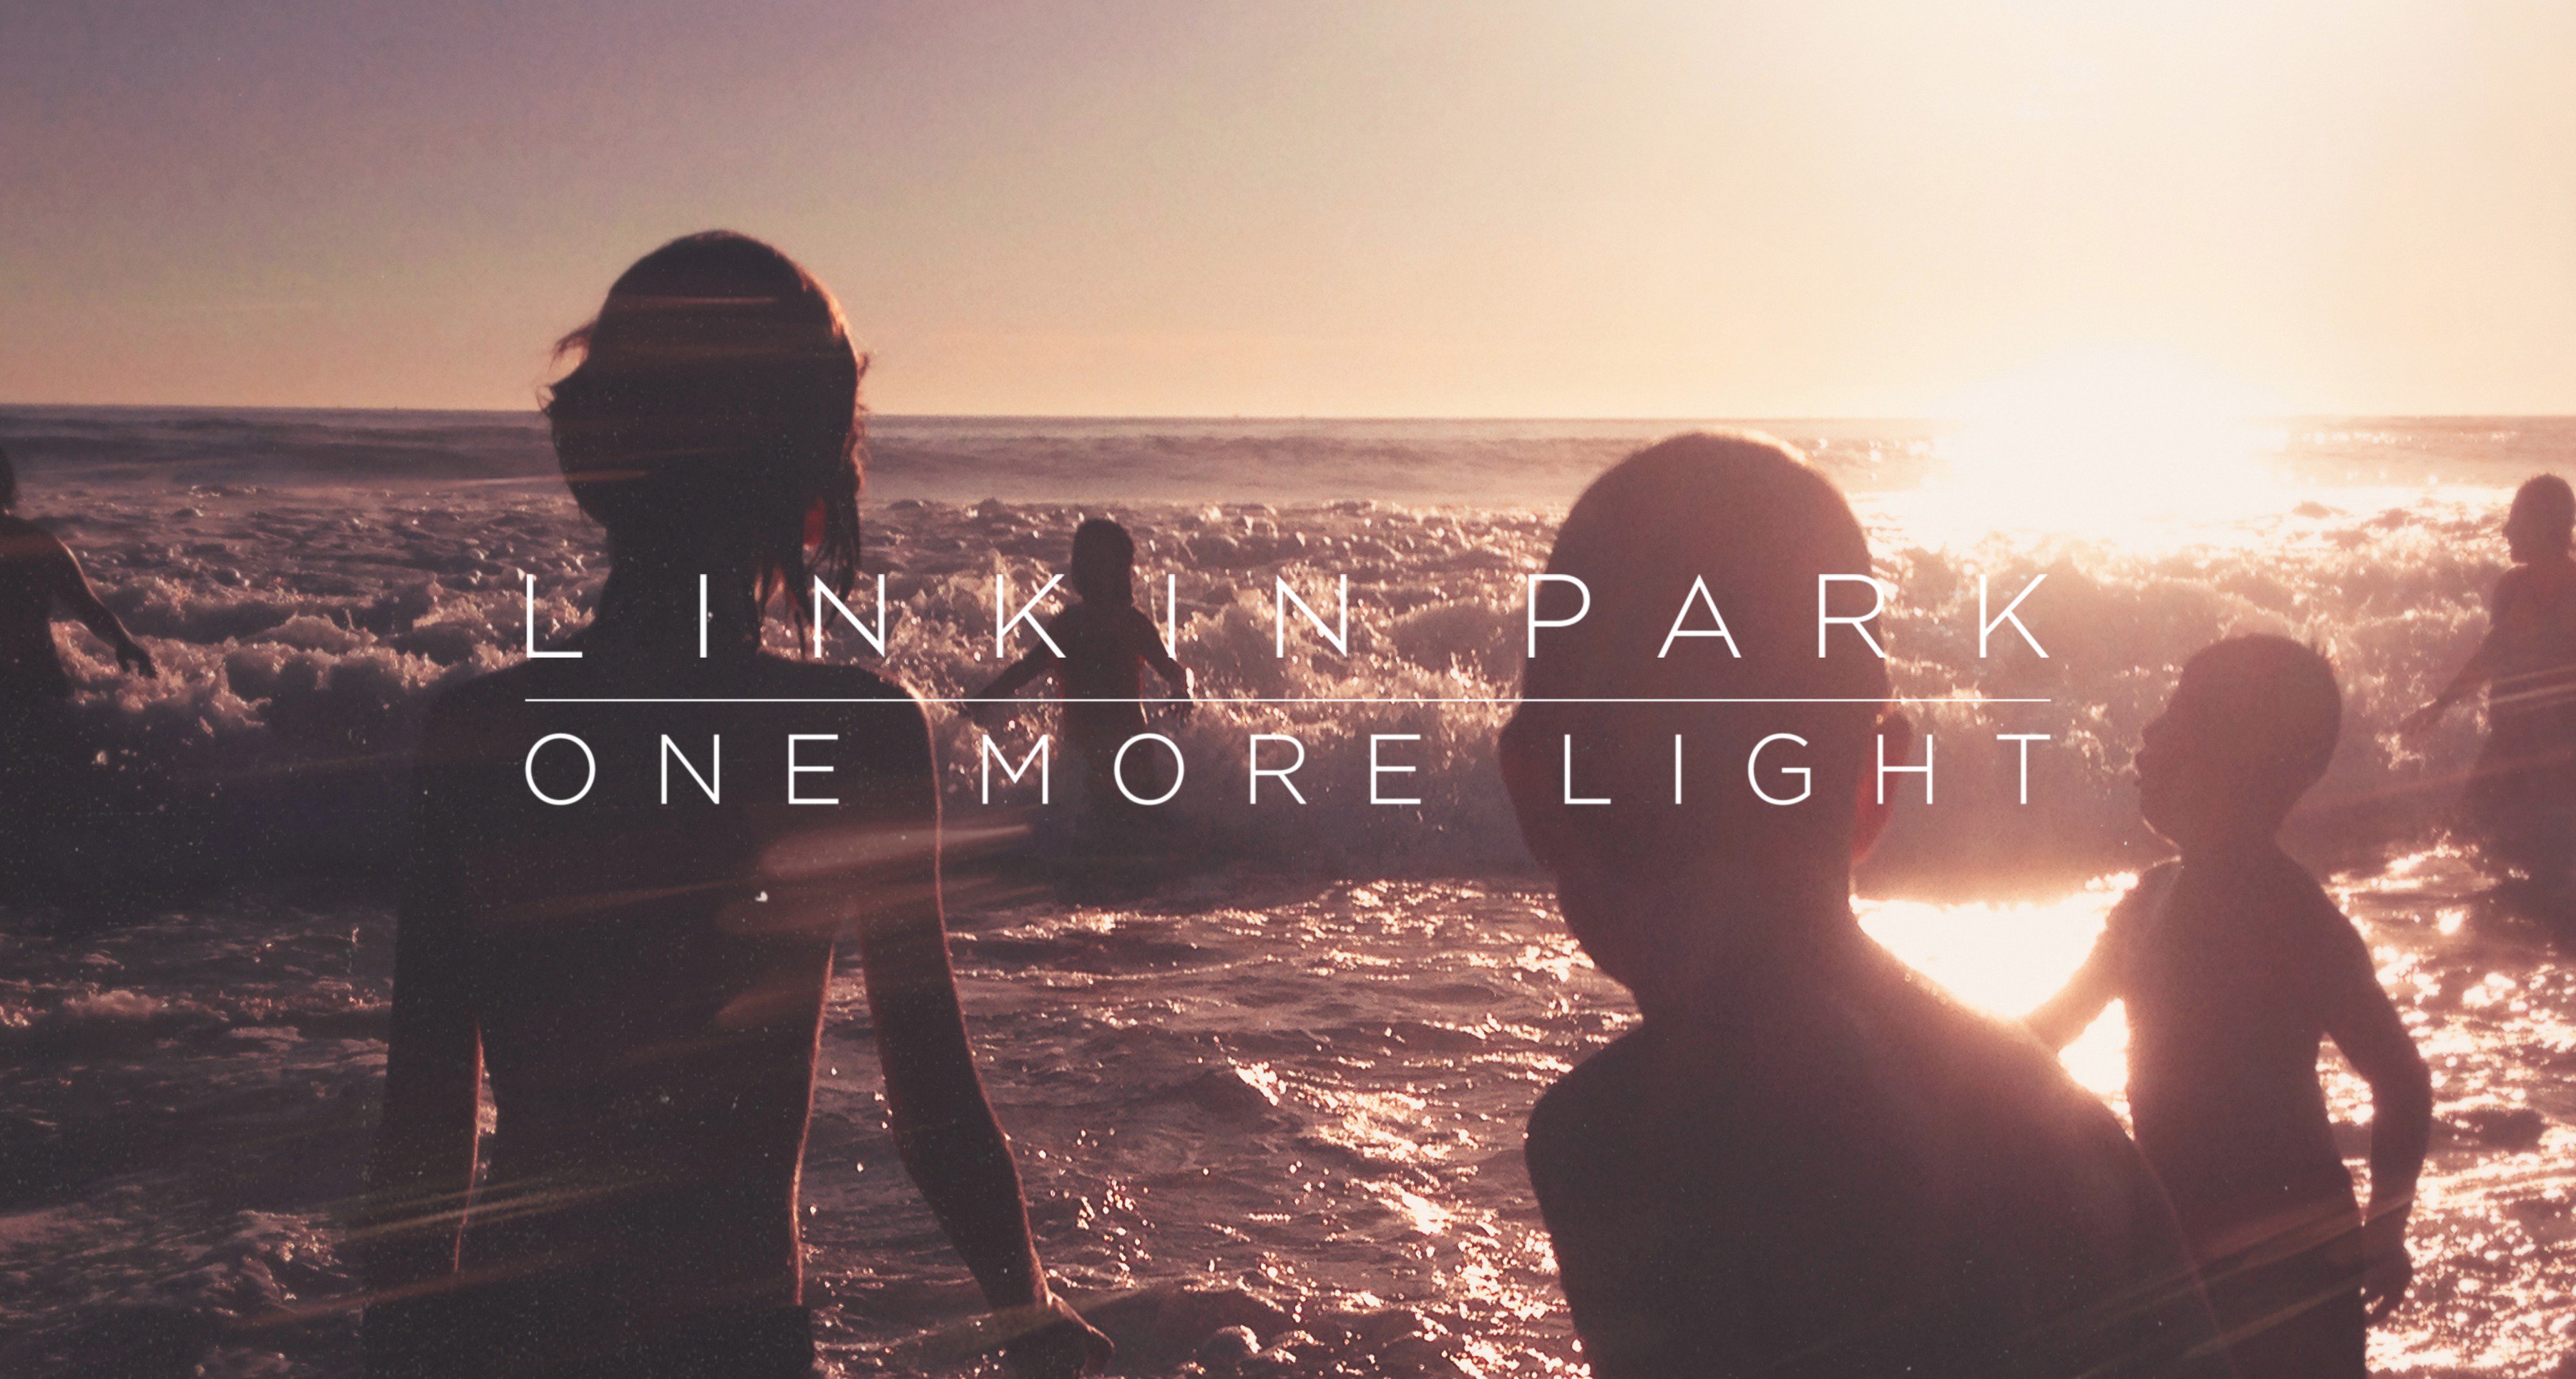 LINKIN PARK on Twitter: "Listen to #OneMoreLight, available now: https://t.co/VIlD5hOqFU https://t.co/A7O5eGNXE9" / Twitter